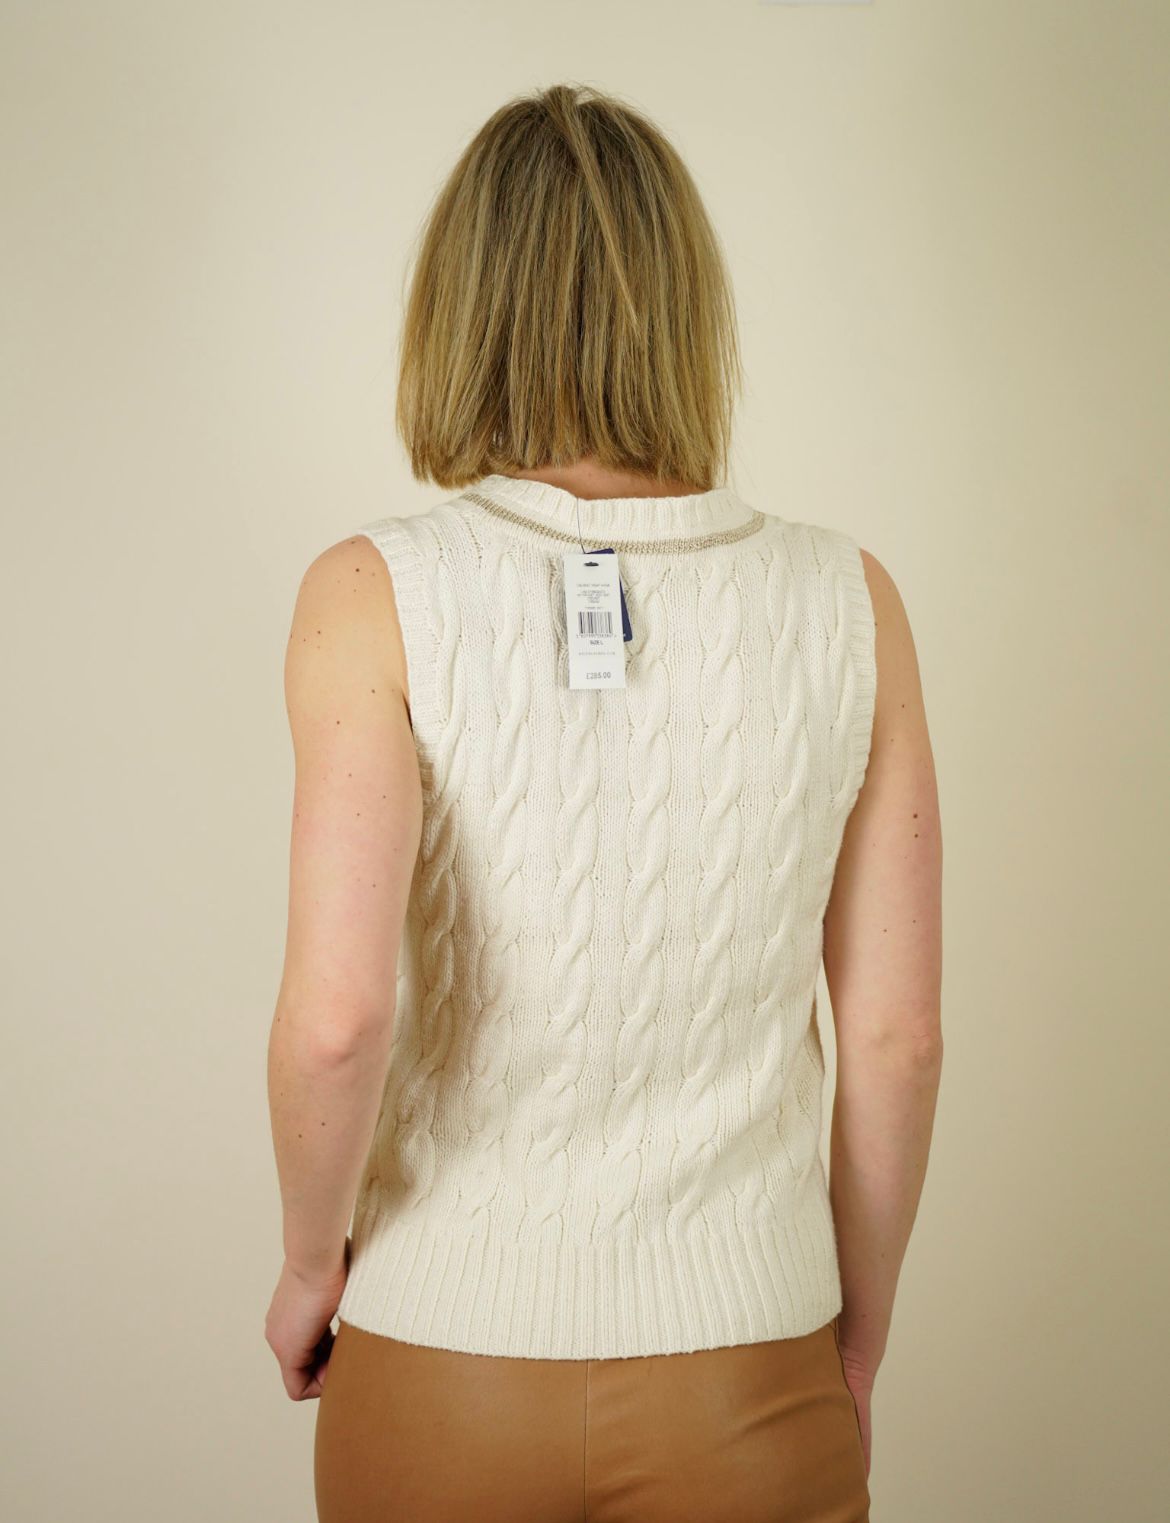 Brand new Ralph Lauren jumper vest size L